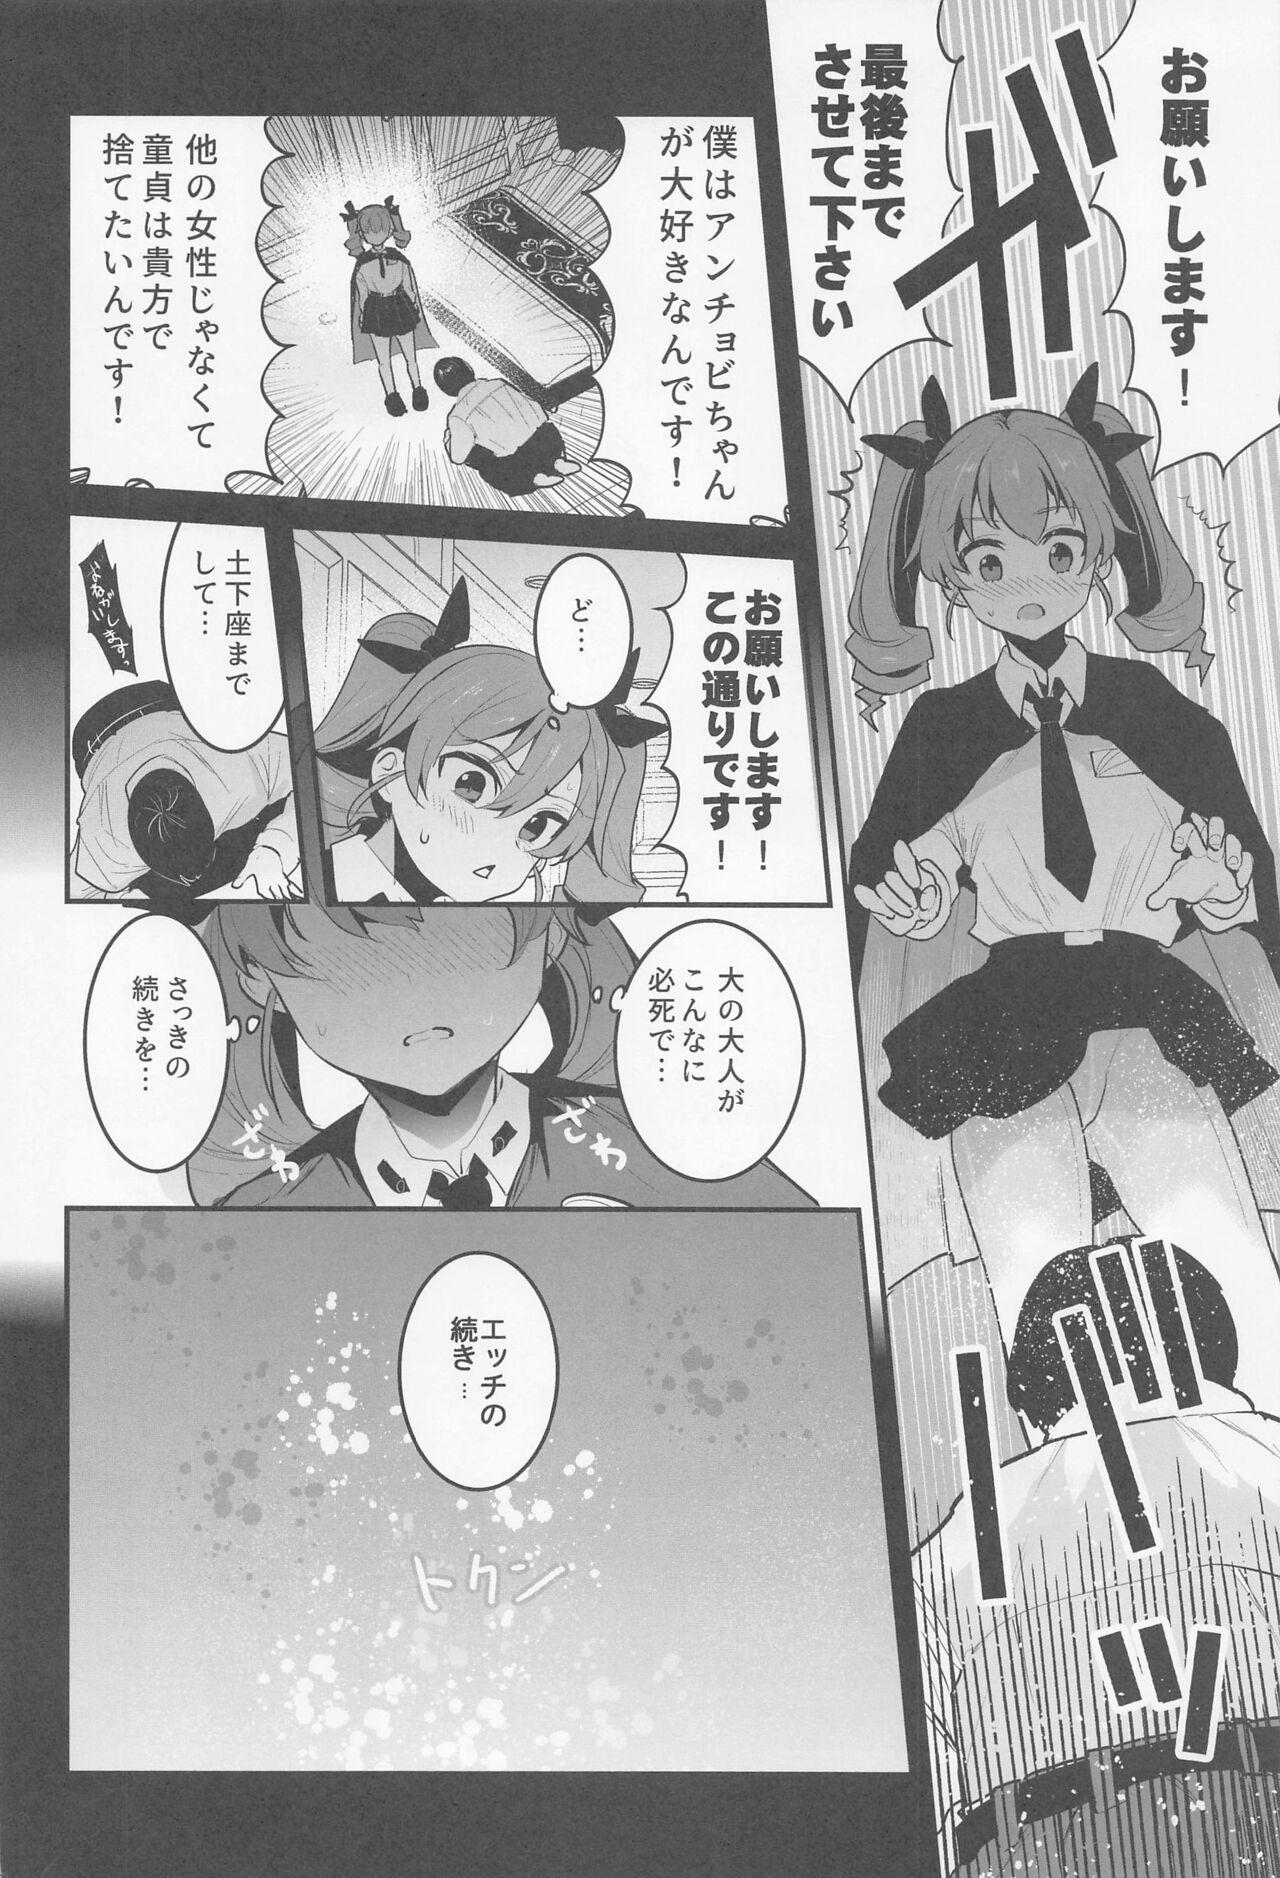 Letsdoeit anchobi dogezadeonegaishitaraippatsuyarasetekuremashita - Girls und panzer Nerd - Page 11